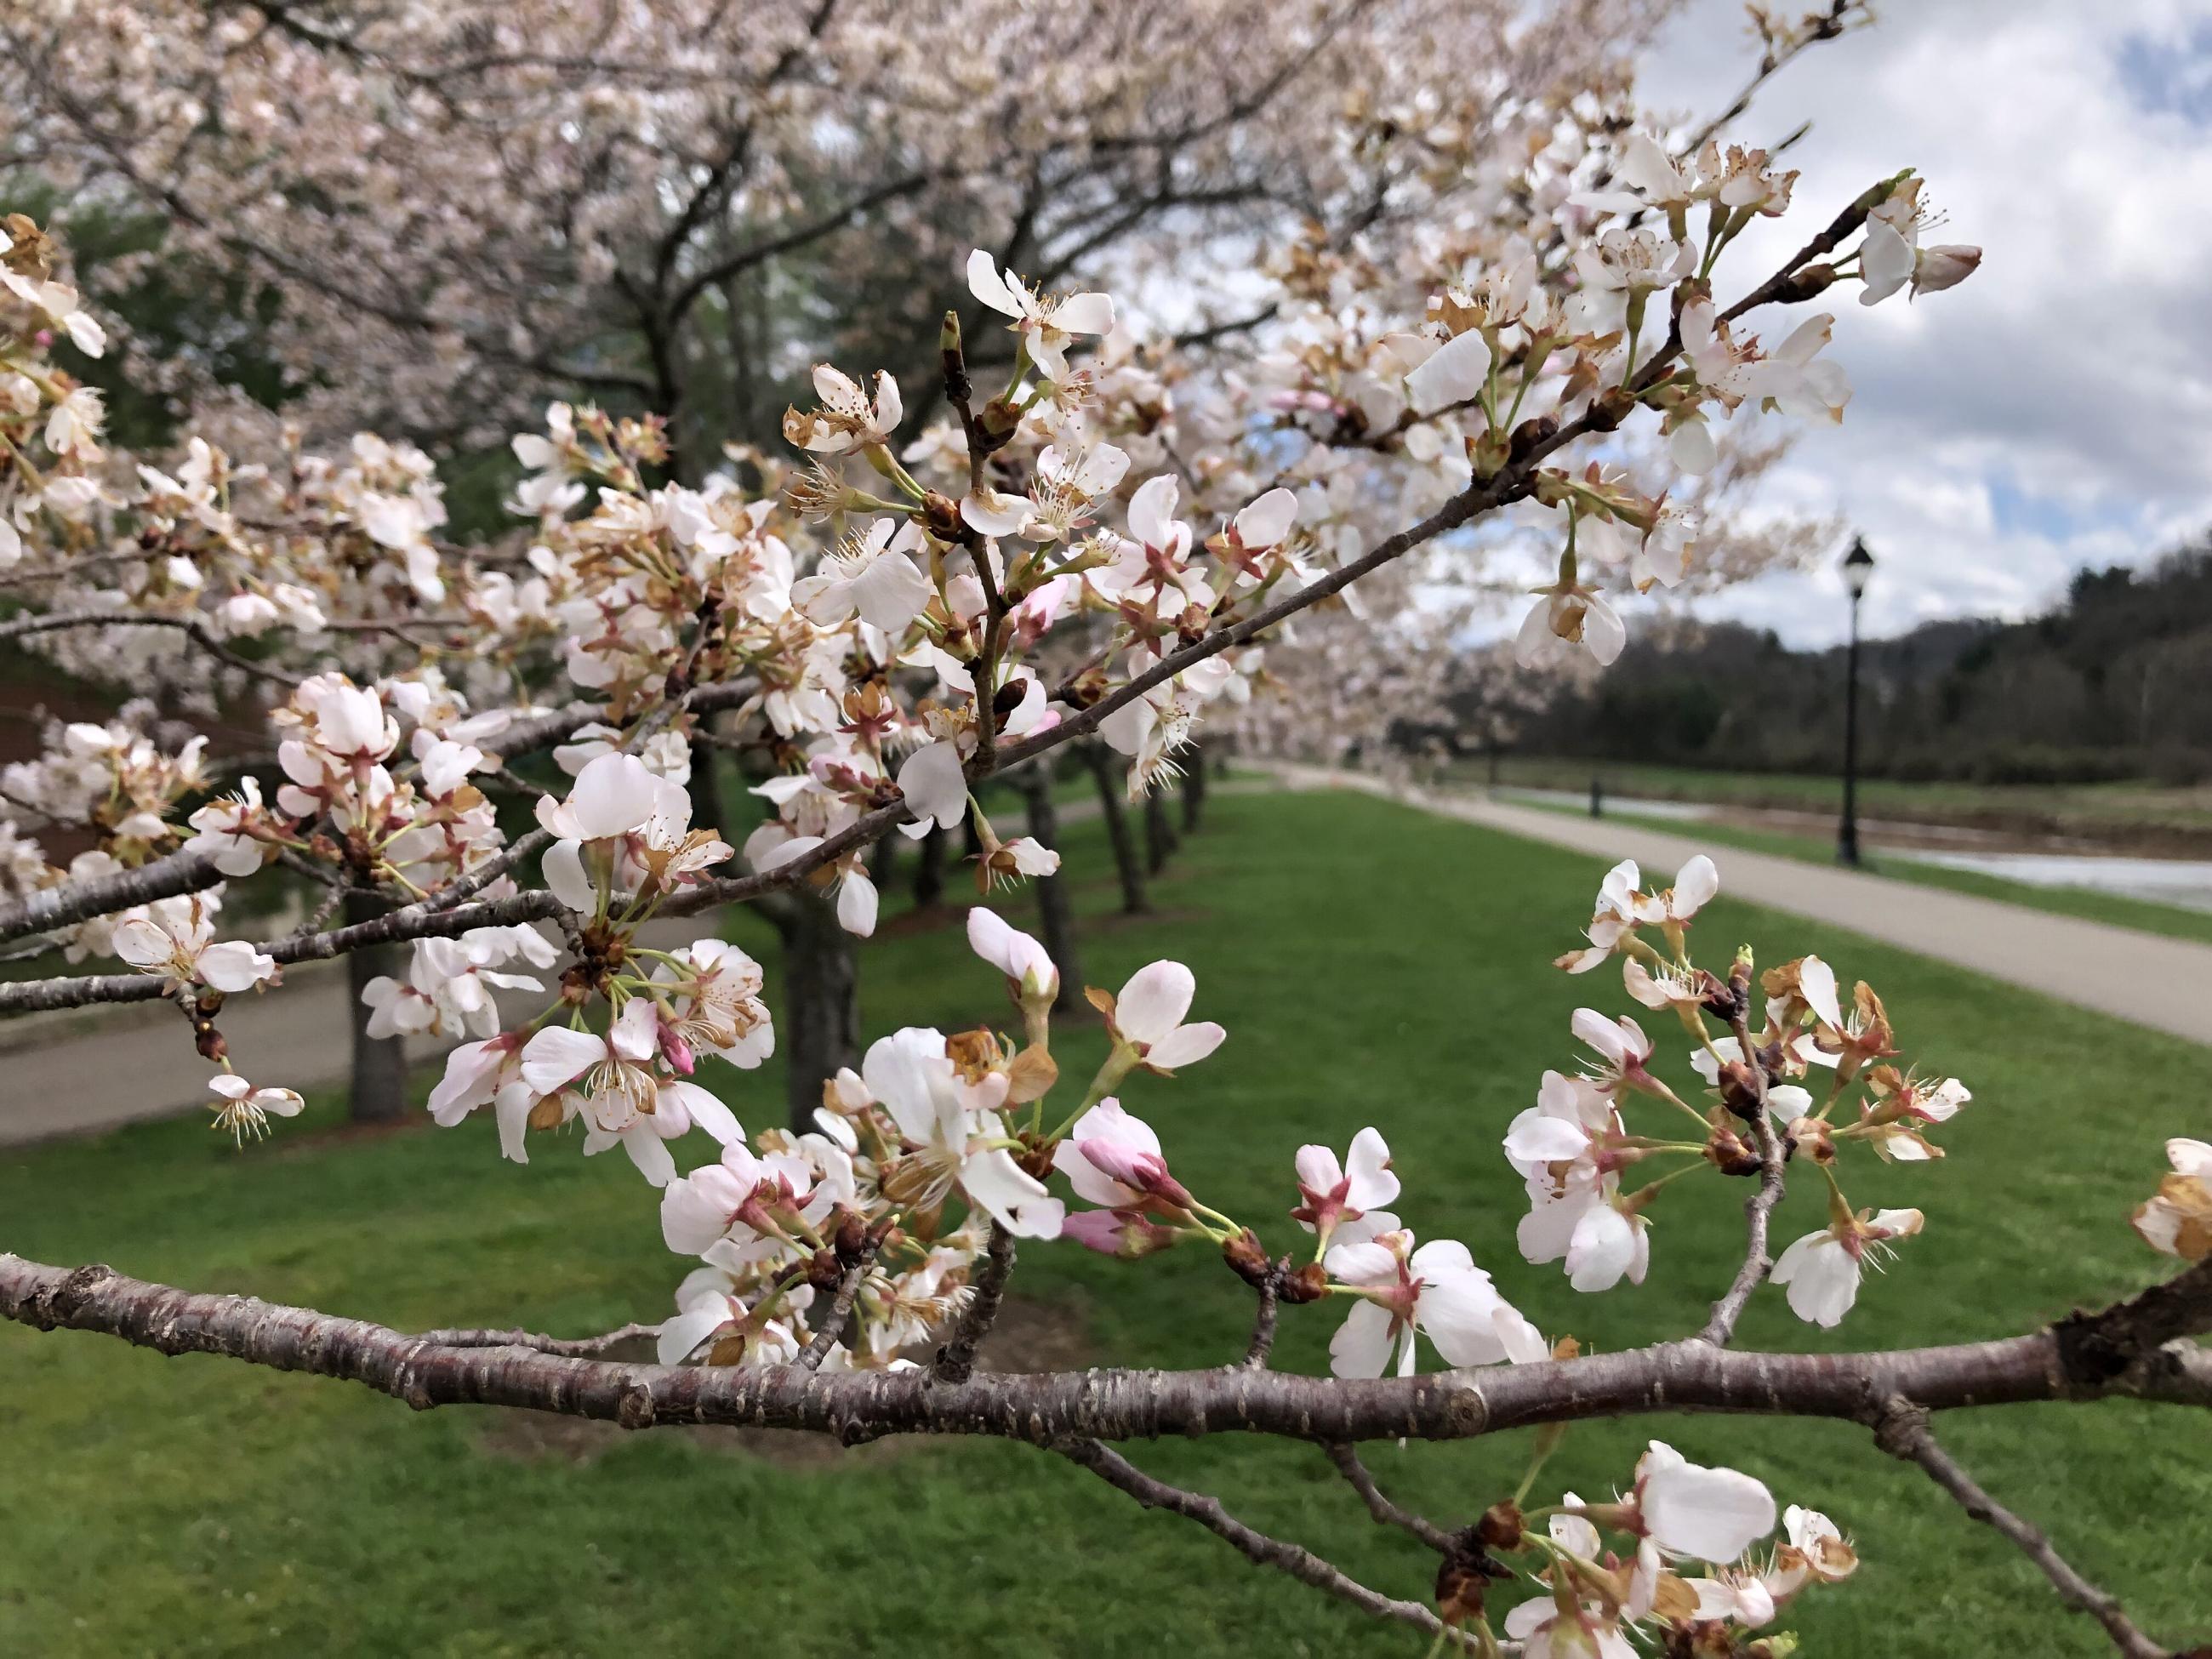 Cherry tree blossoms along the bike path